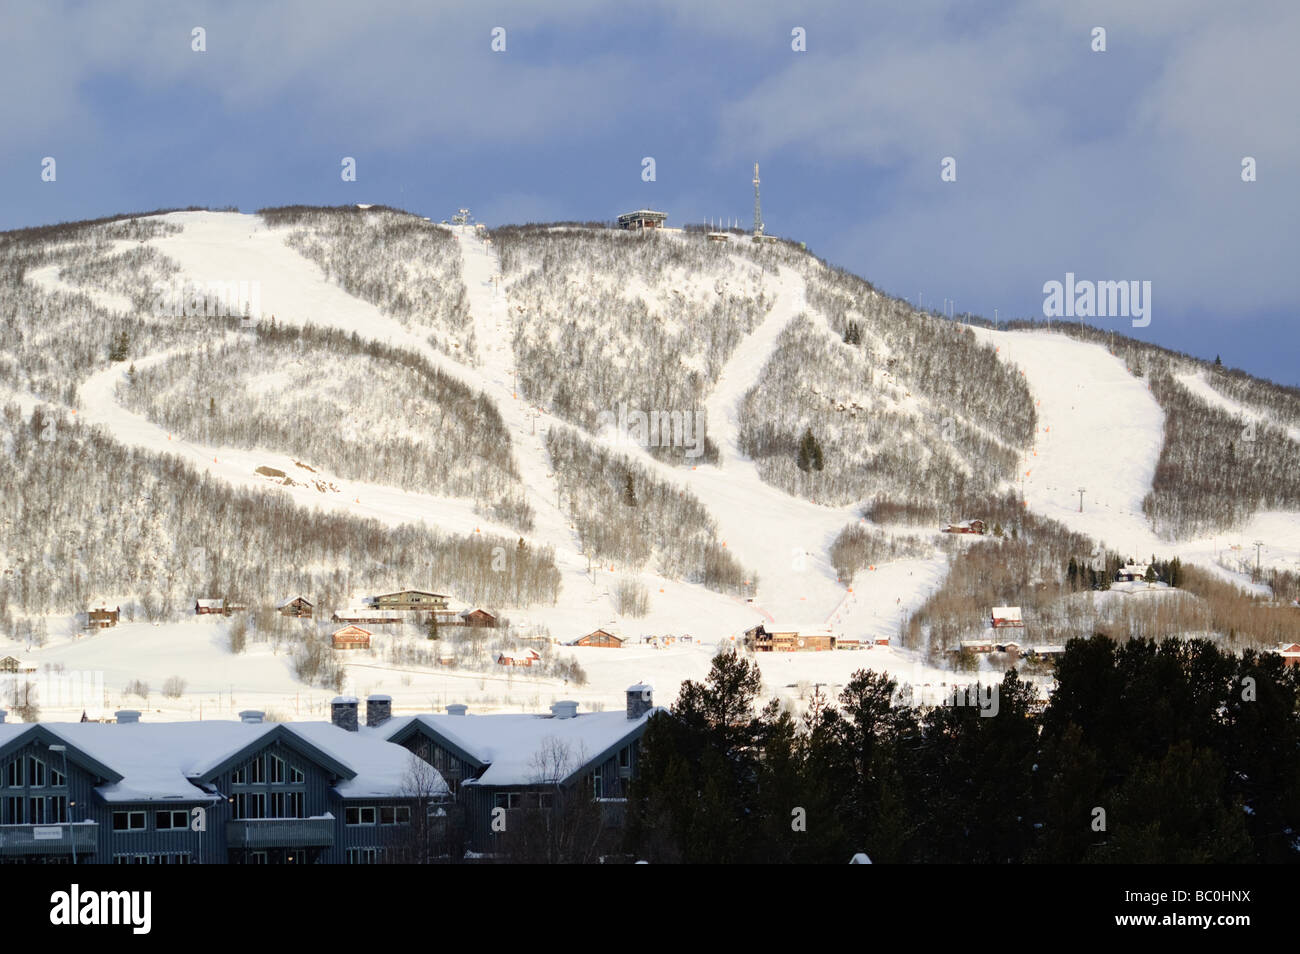 Geilo ski resort, Norway, Scandinavia Stock Photo: 24600182 - Alamy